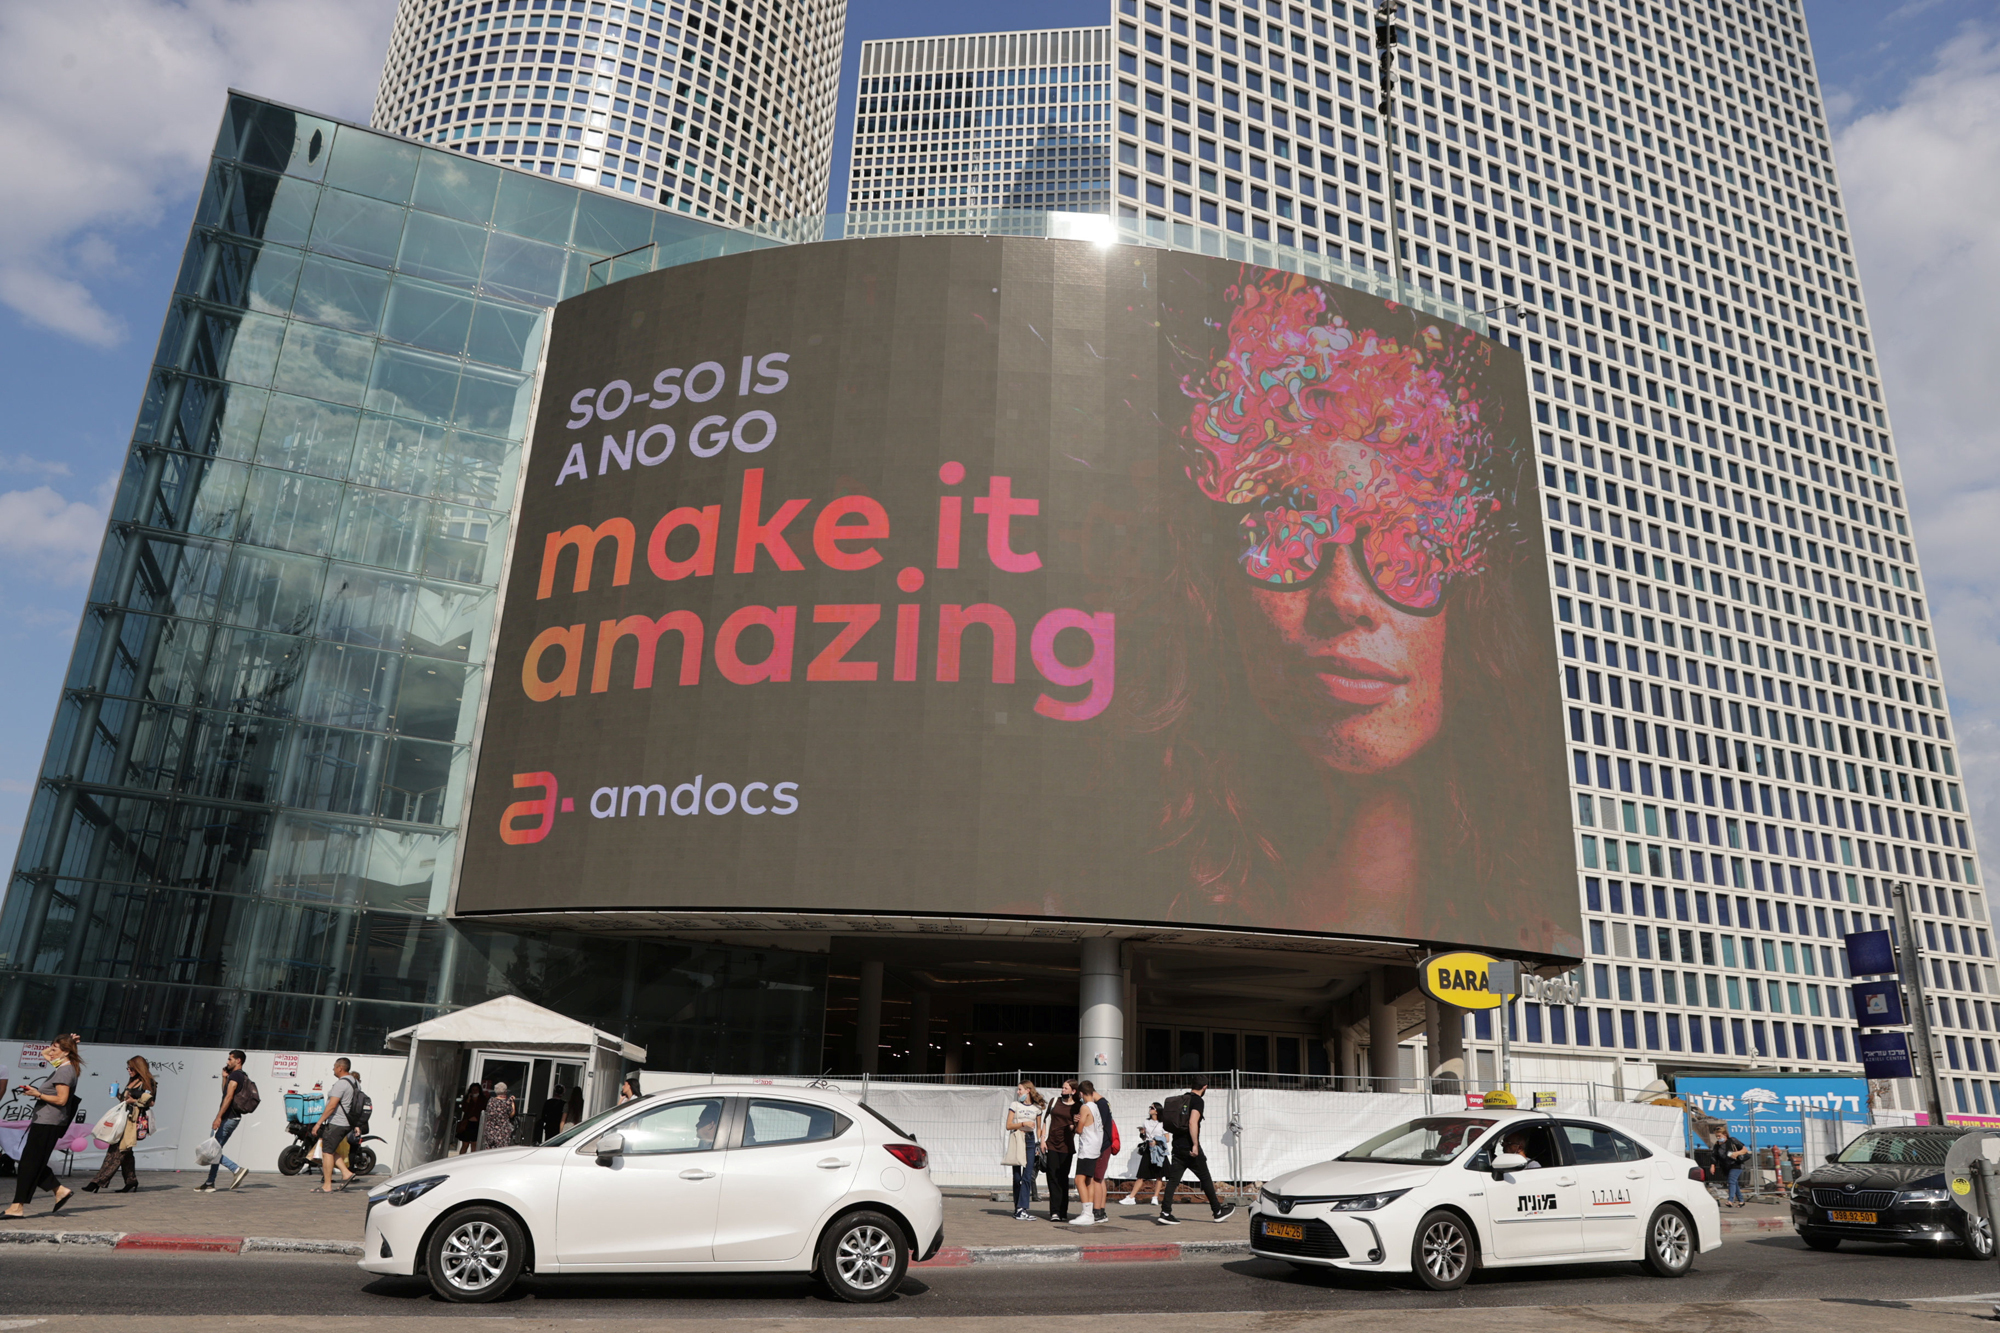 Amdocs "Make it Amazing" campaign. Photo: Orel Cohen